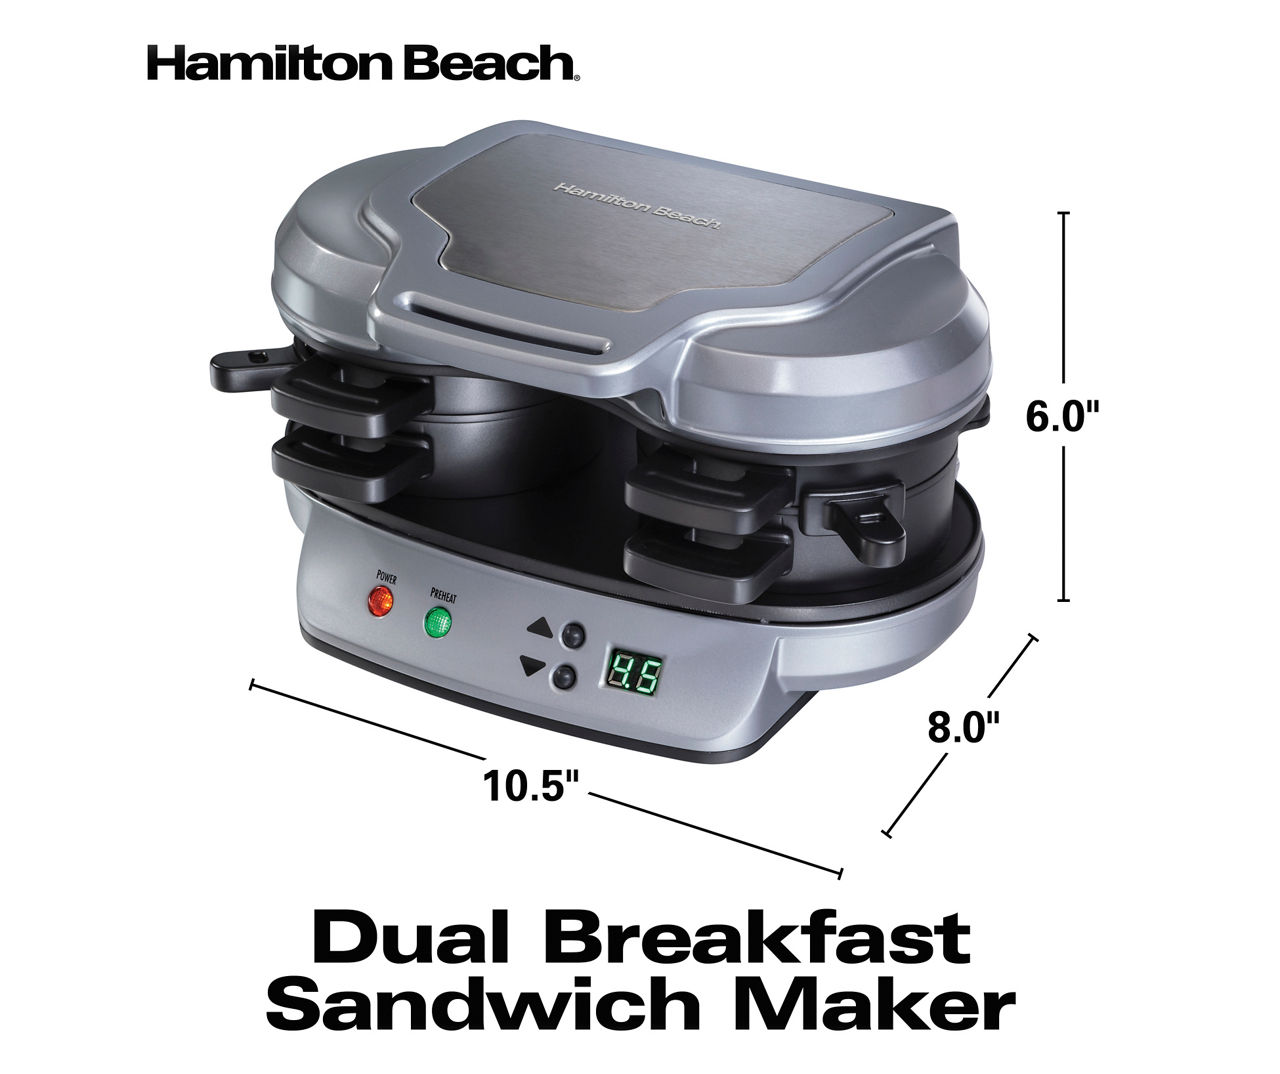 Hamilton Beach Dual Breakfast Sandwich Maker